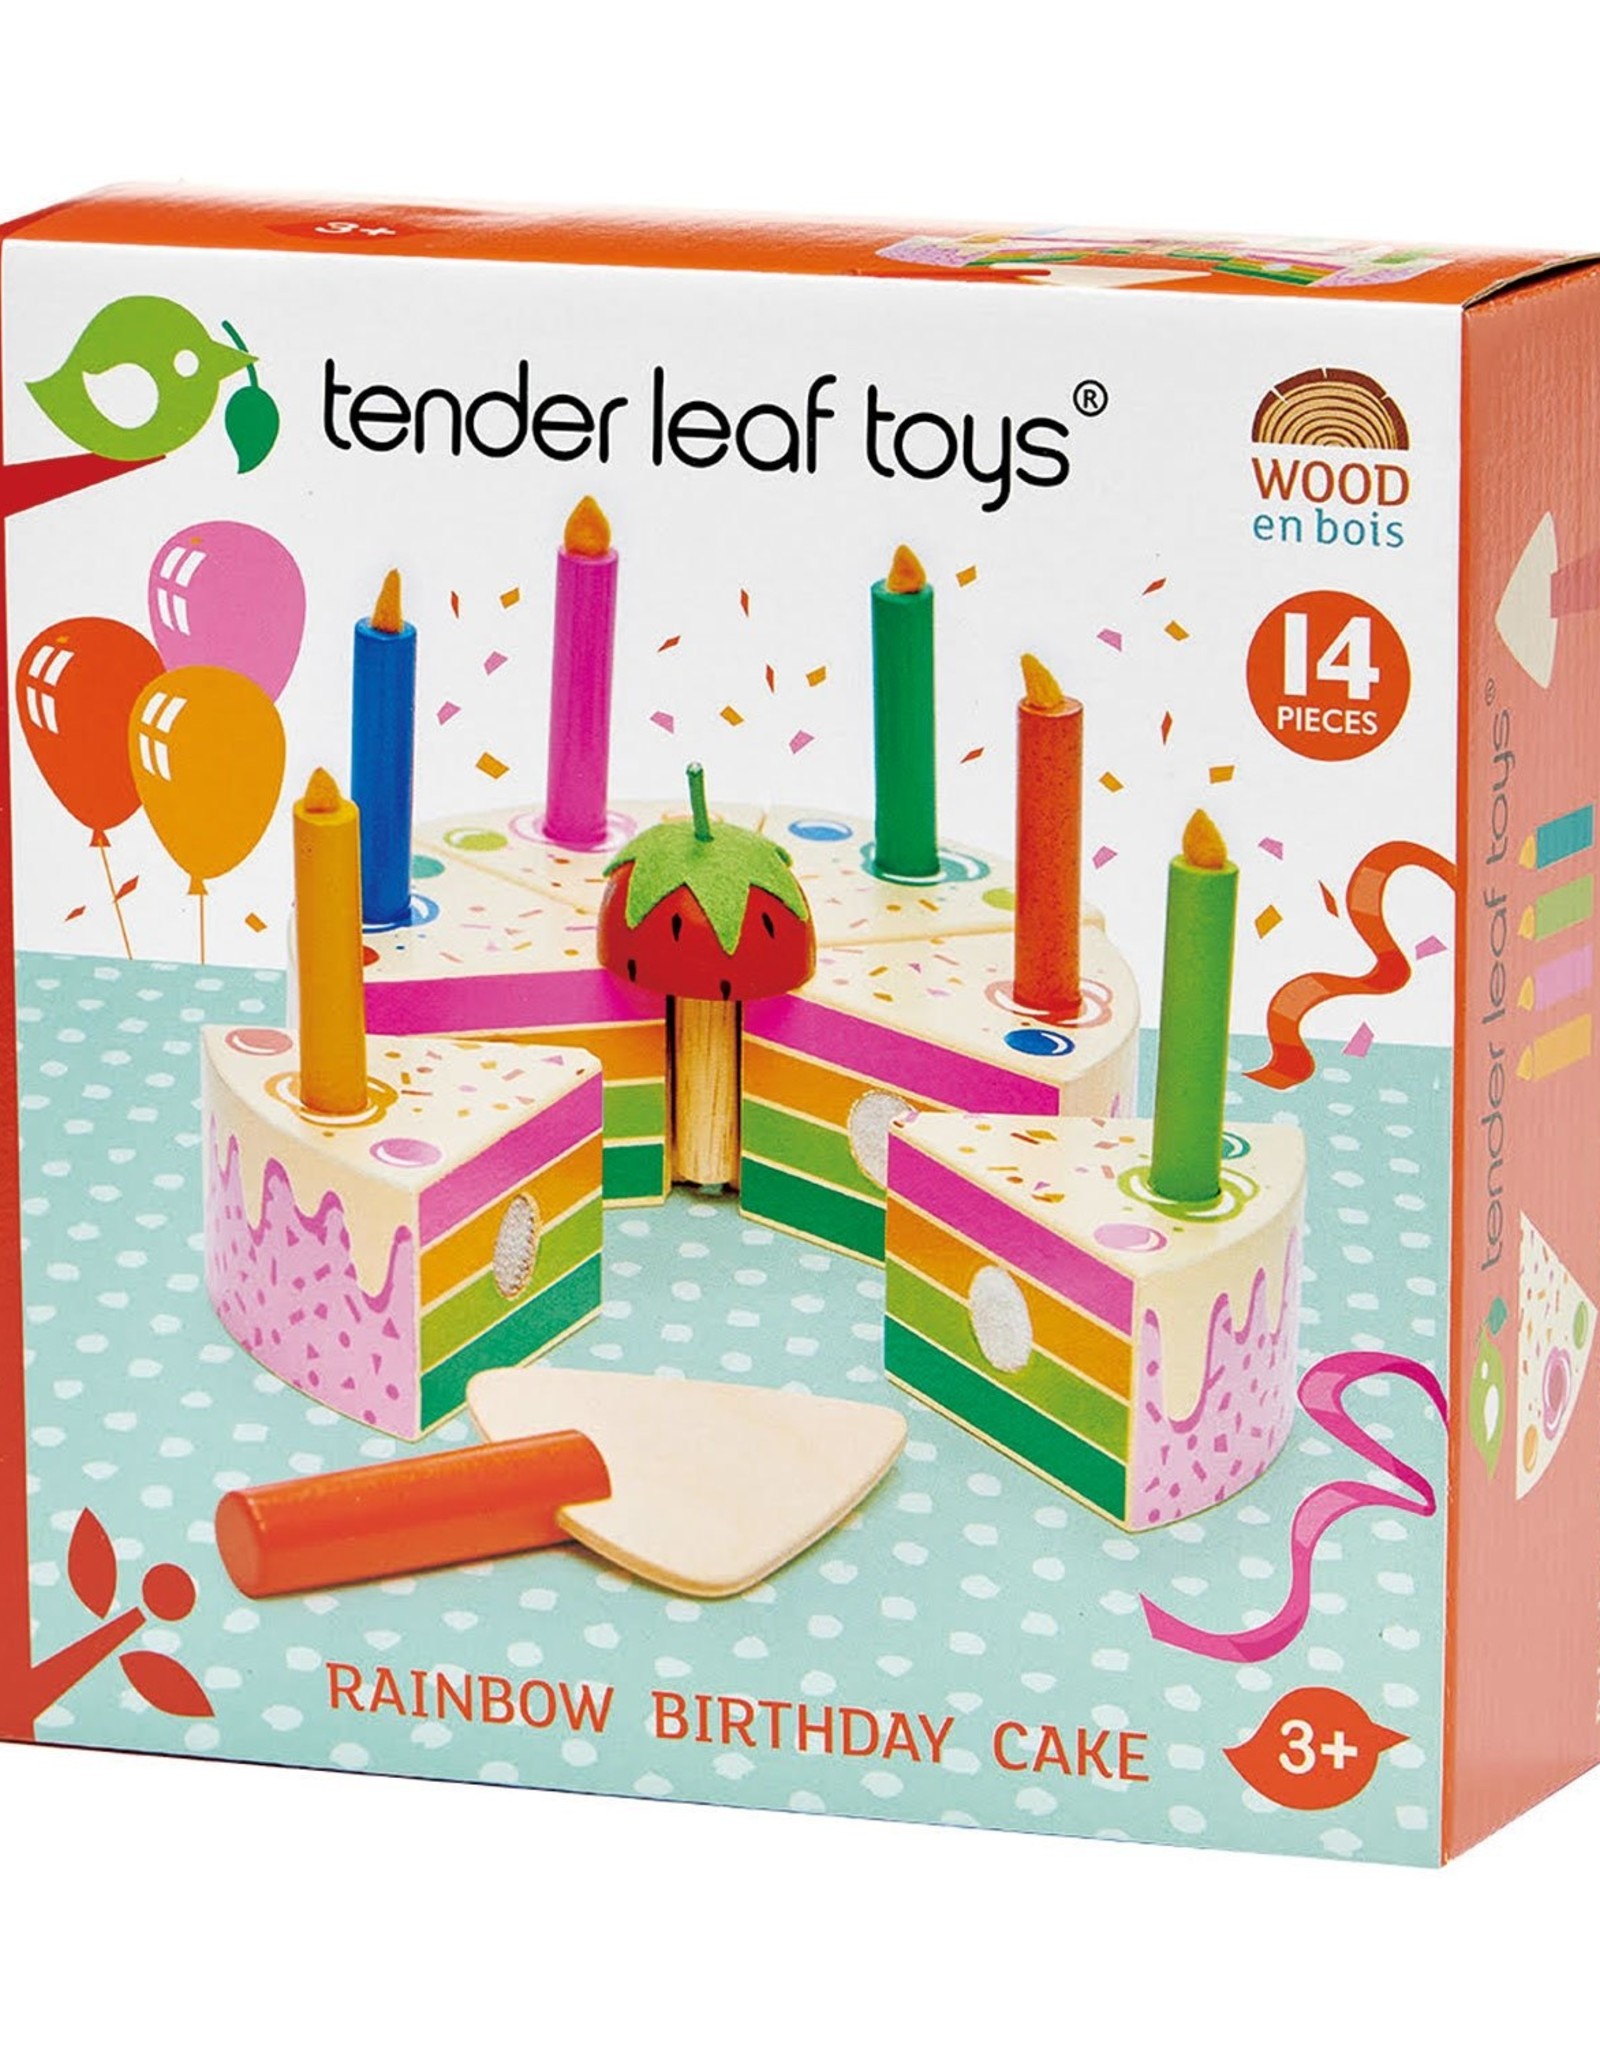 Tender leaf toys Rainbow Birthday Cake